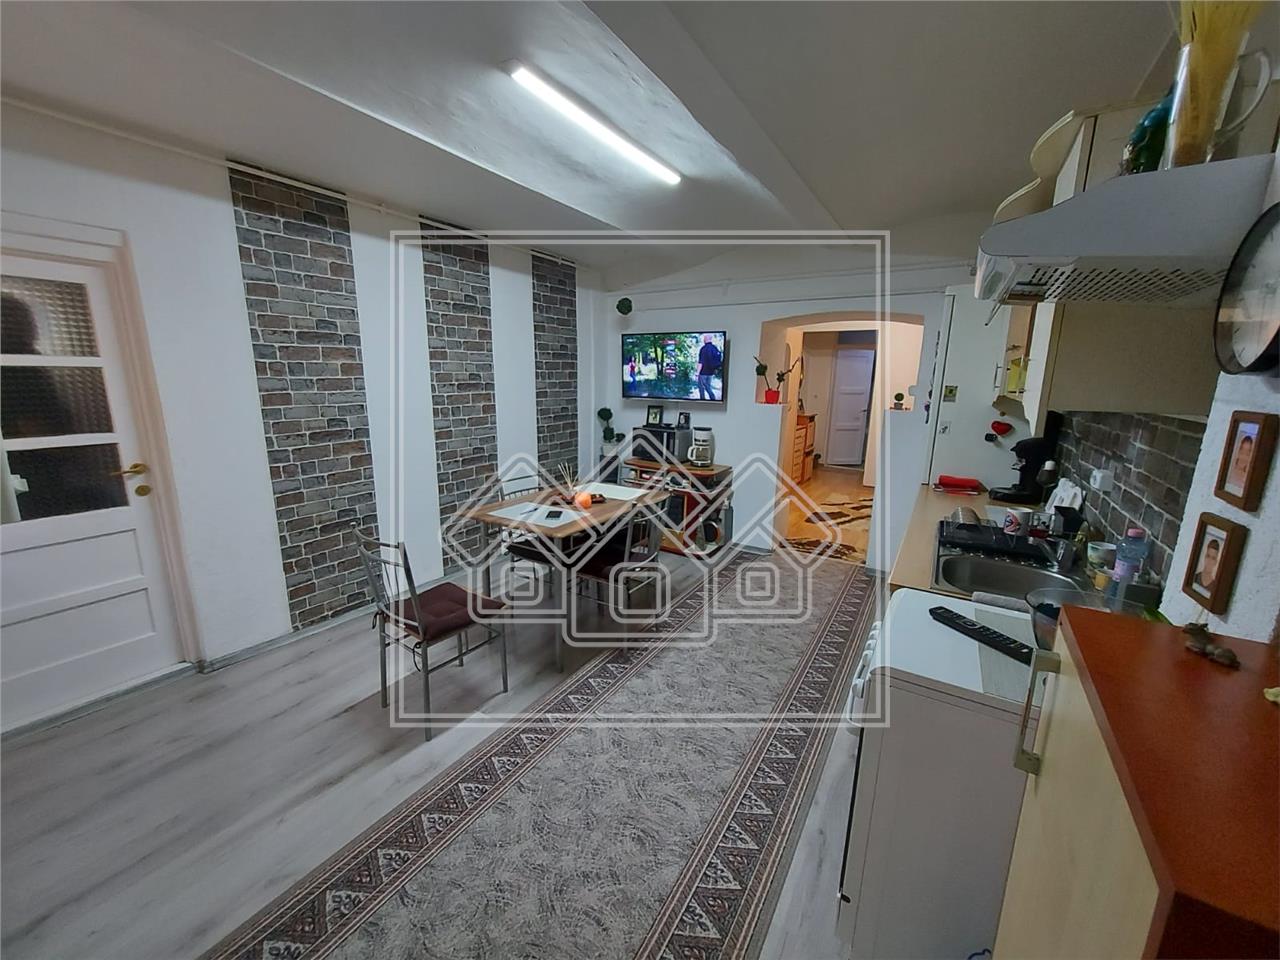 Apartament 2 camere de vanzare in Sibiu-52 mp+gradina, B-dul Victoriei